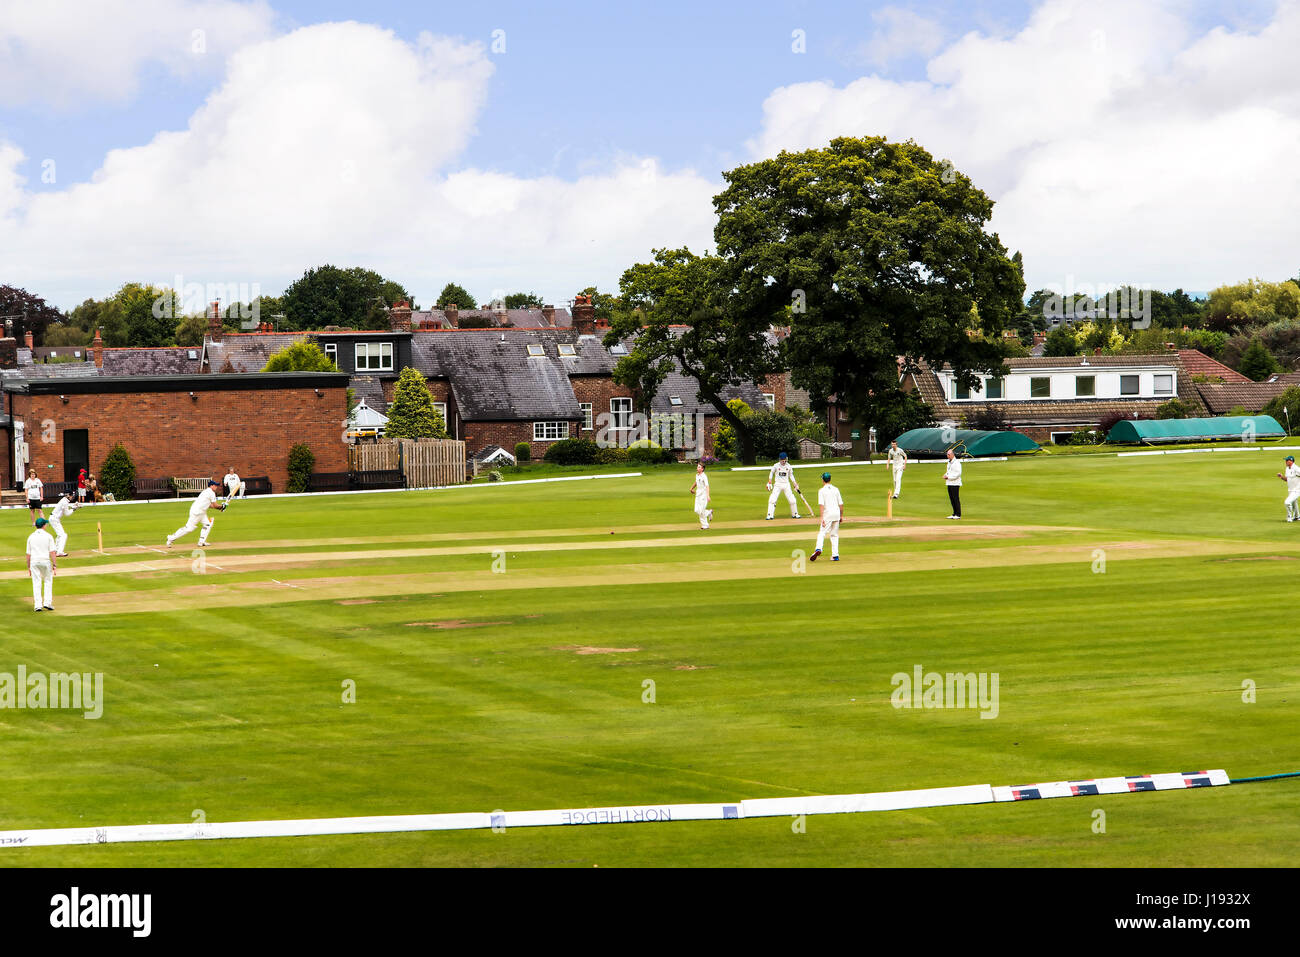 Alderley Edge Cricket Club is an amateur cricket club based at Alderley Edge in Cheshire Stock Photo